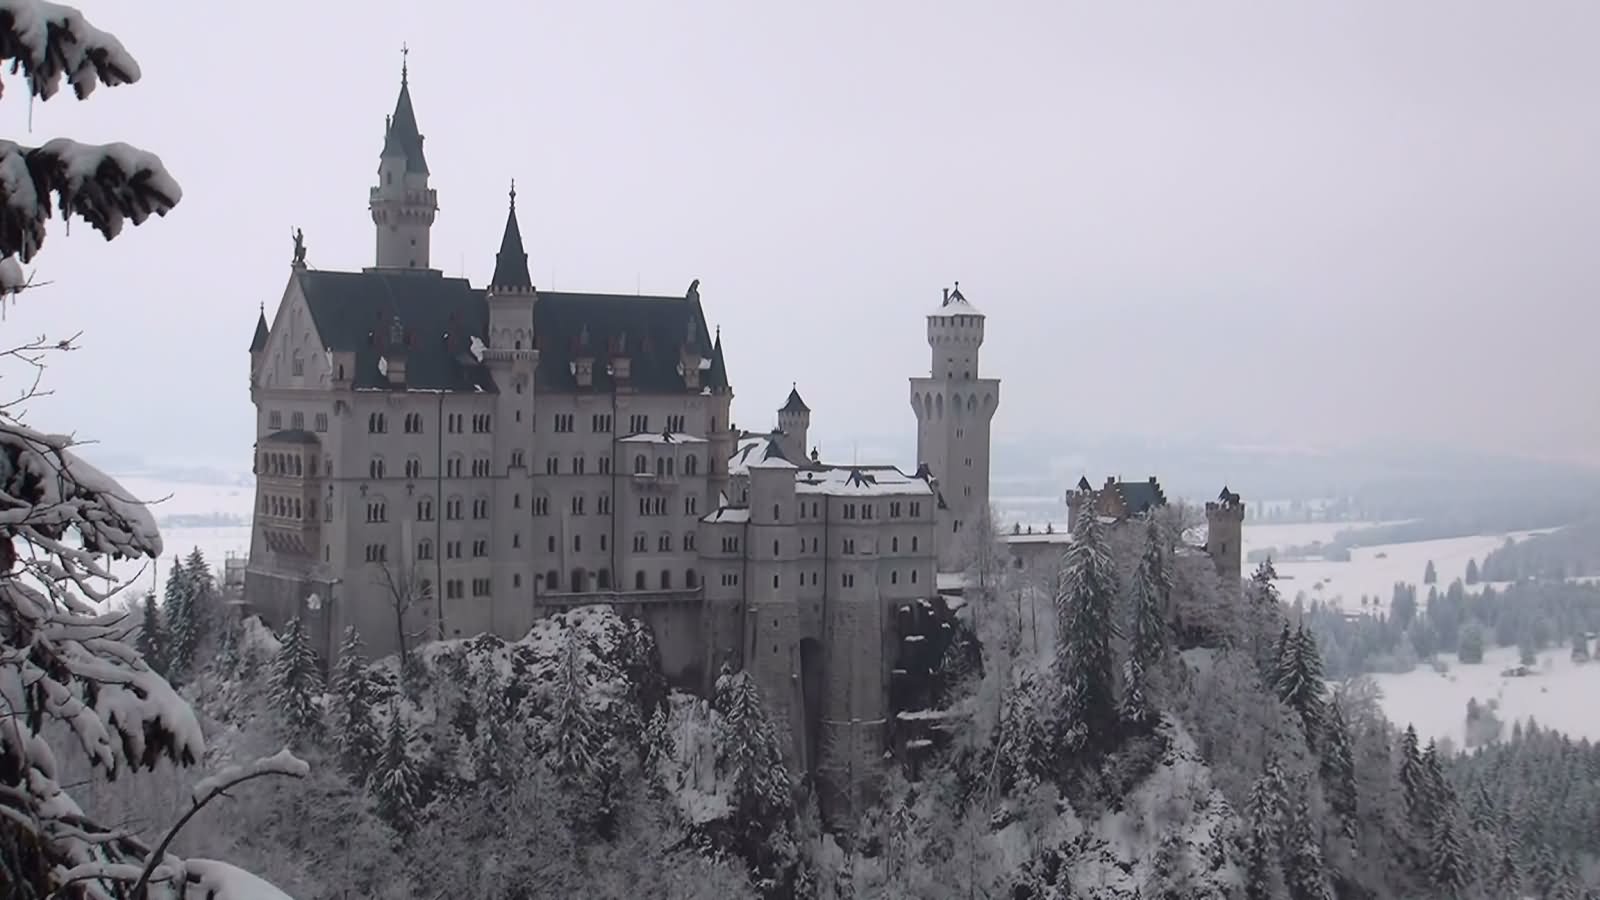 The Neuschwanstein Castle In Winters Picture